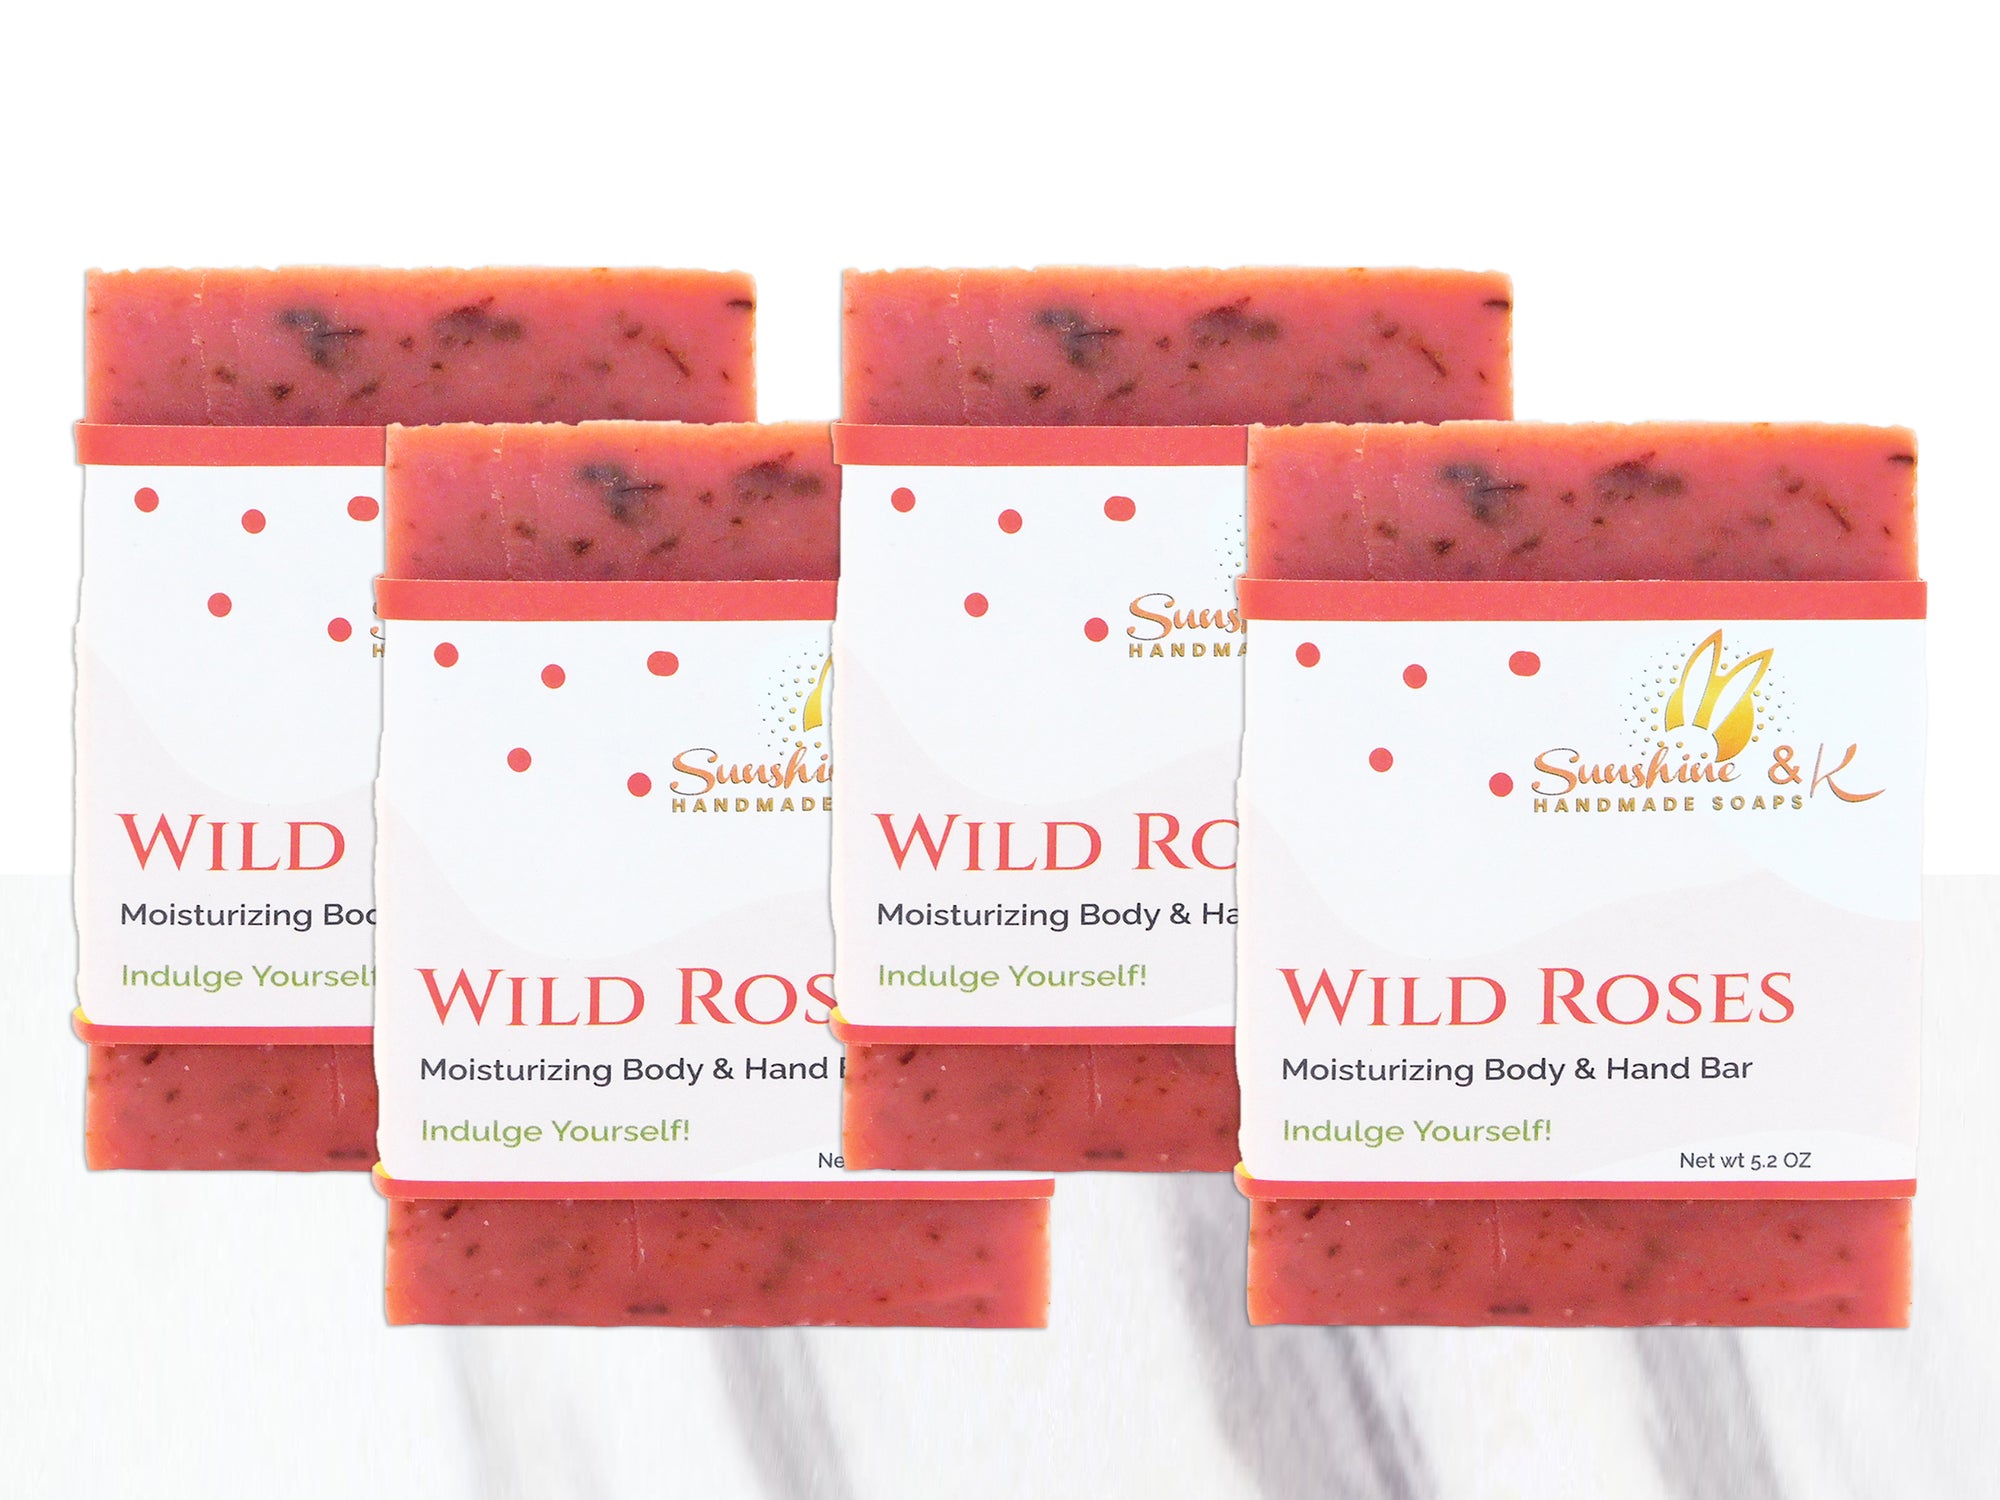 Wild roses Soap Bar - Body & Face Bar Soap, Handmade Bath Soap, Moisturizing Bar Soap With Beeswax, Rice Bran Oil, & Natural Base Oils, Natural Soap Bars, 5 oz, Sunshine & K Handmade Soaps